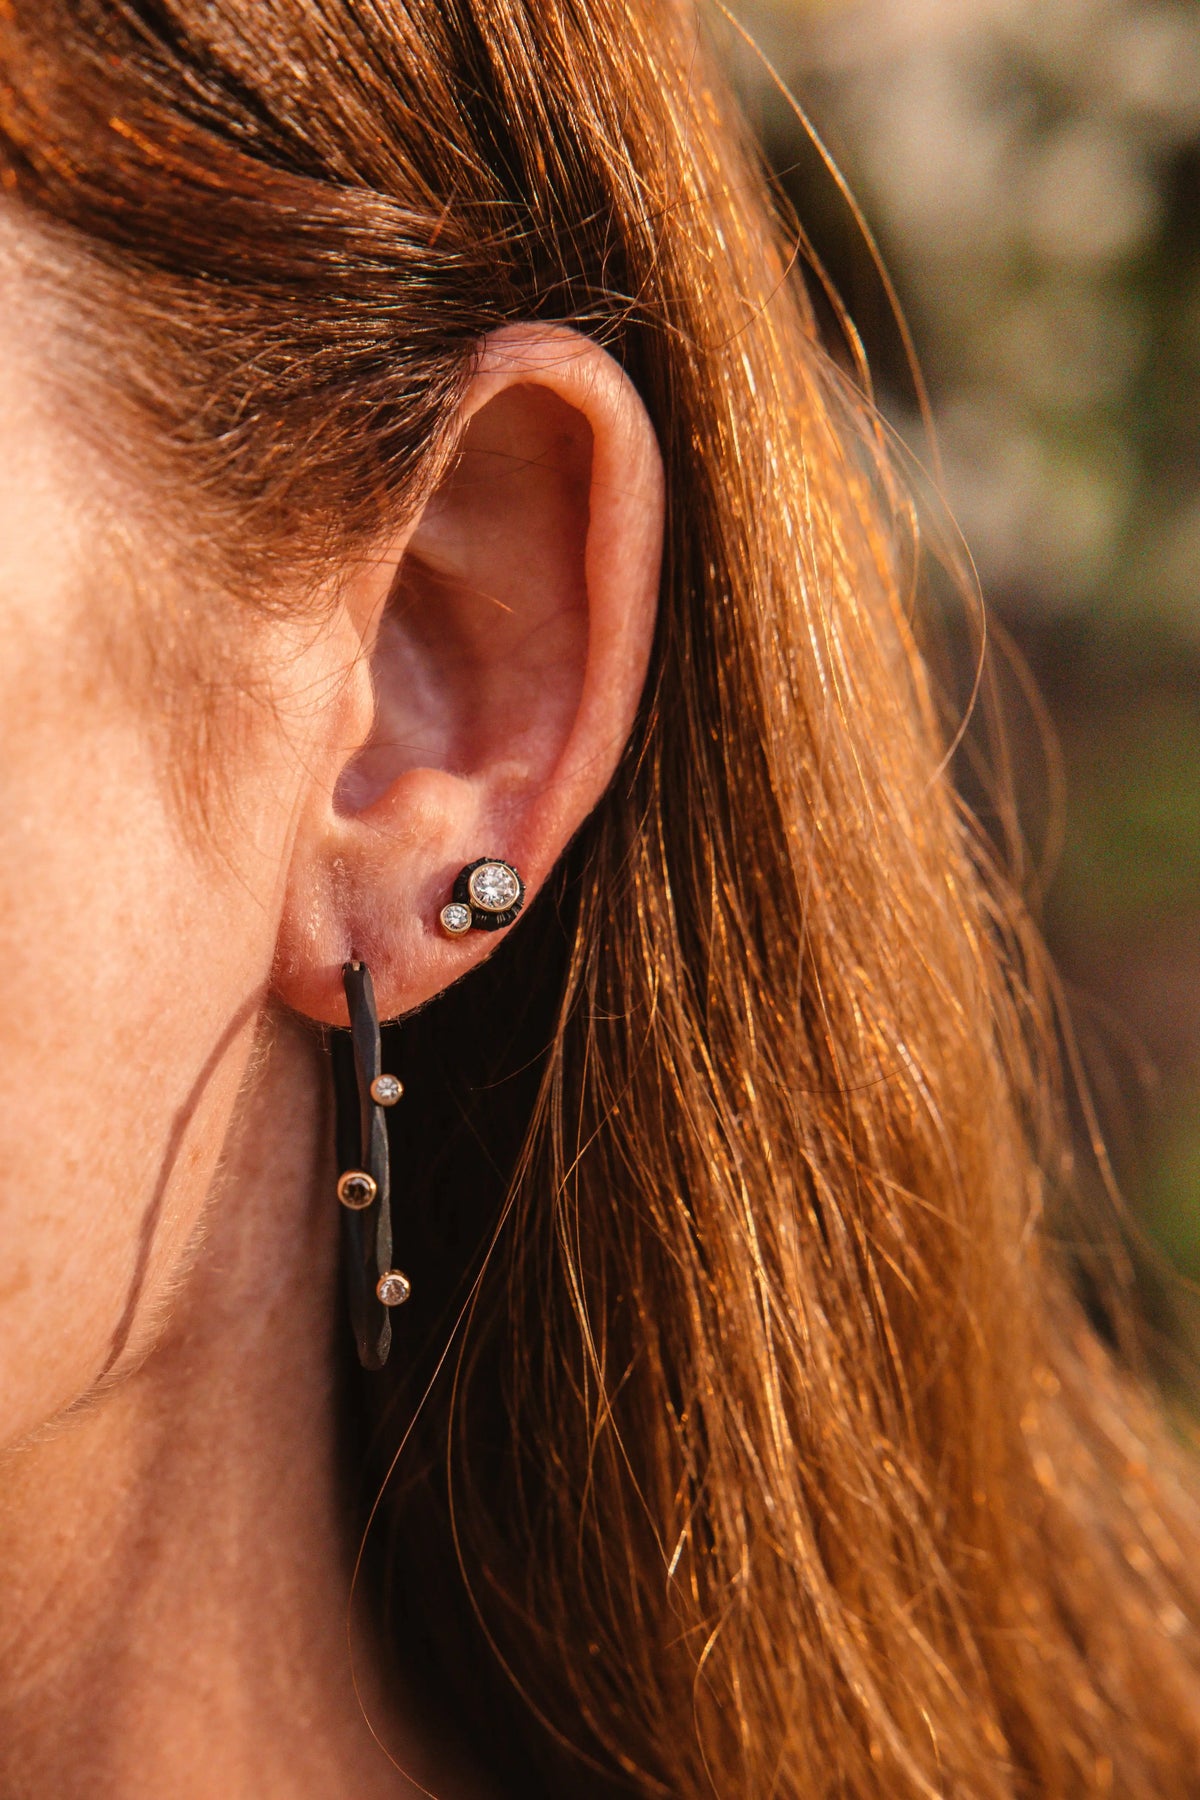 Rouge hoop earrings paired with white diamond stud earrings designed Sarah Graham